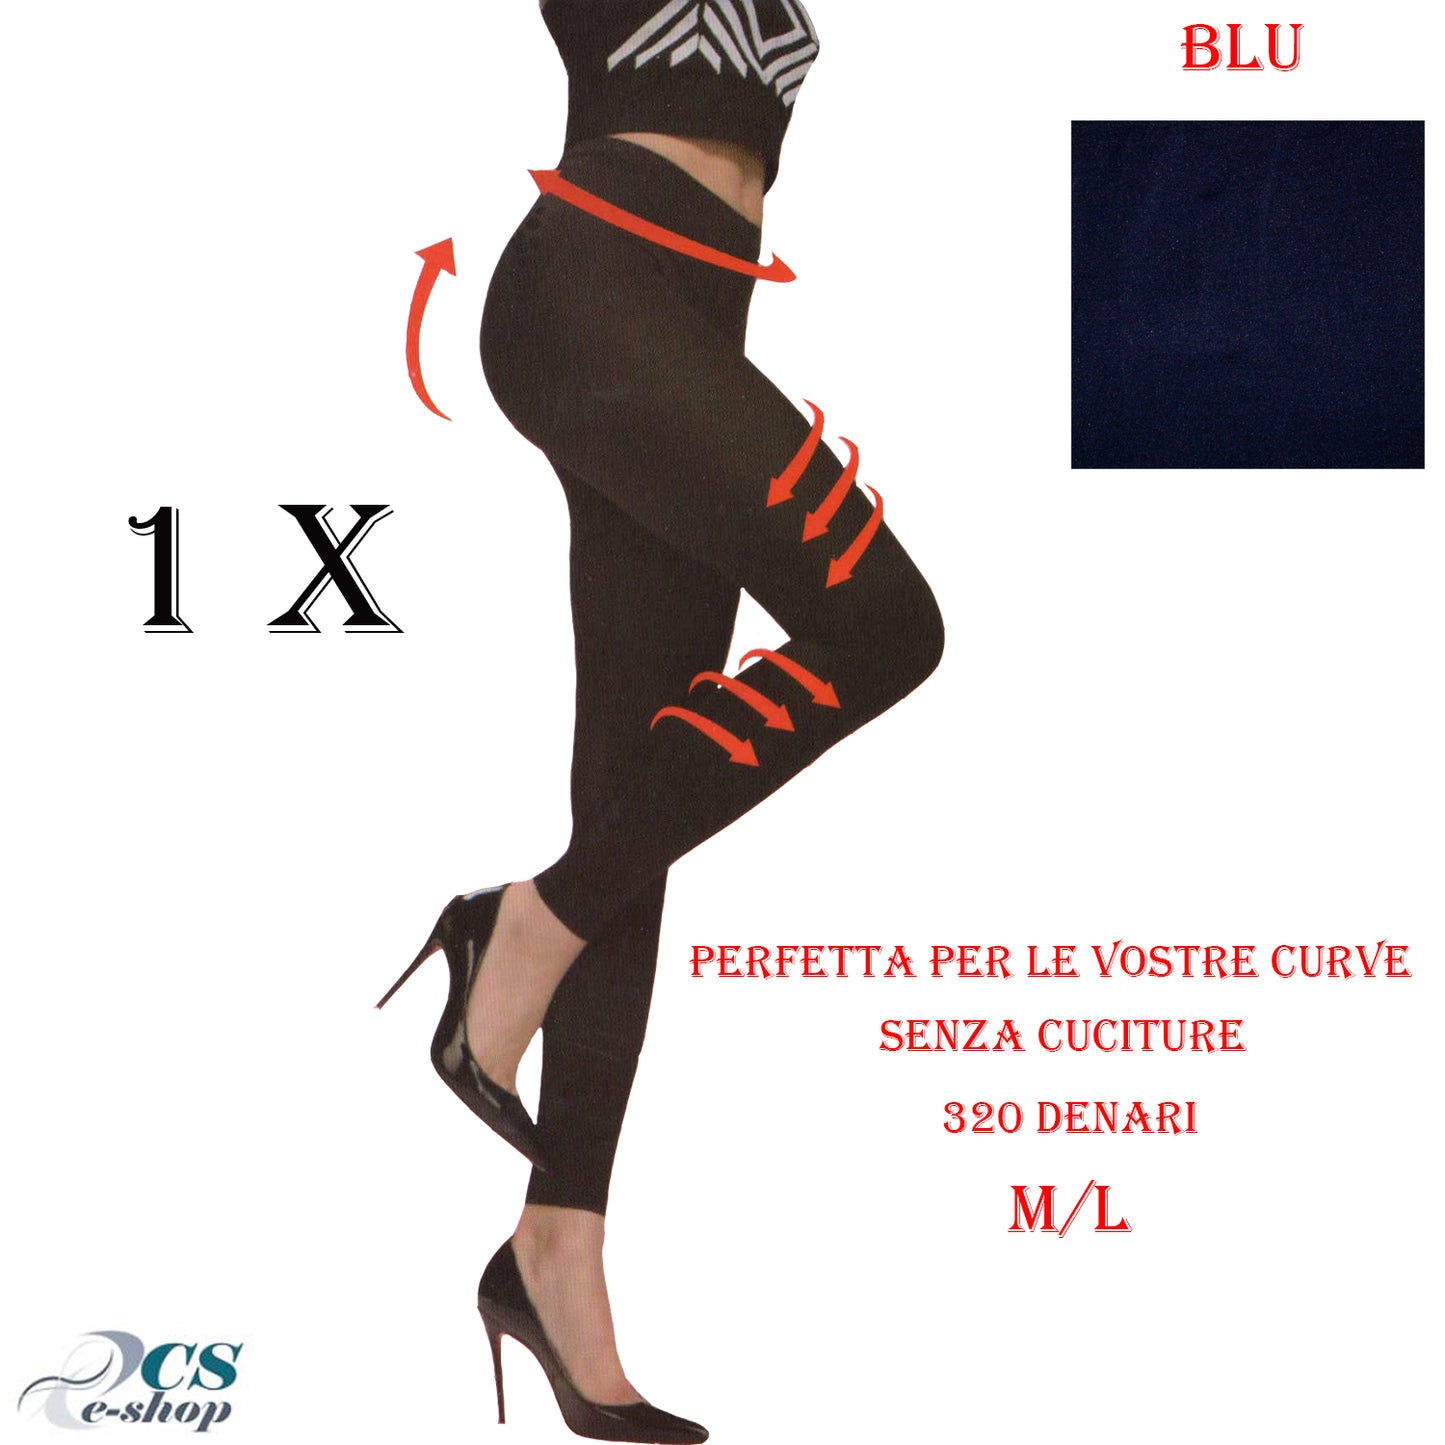 Leggings Fuseaux Donna M/L XL/XXL Nero Bordeaux blu grigio inverno aderenti